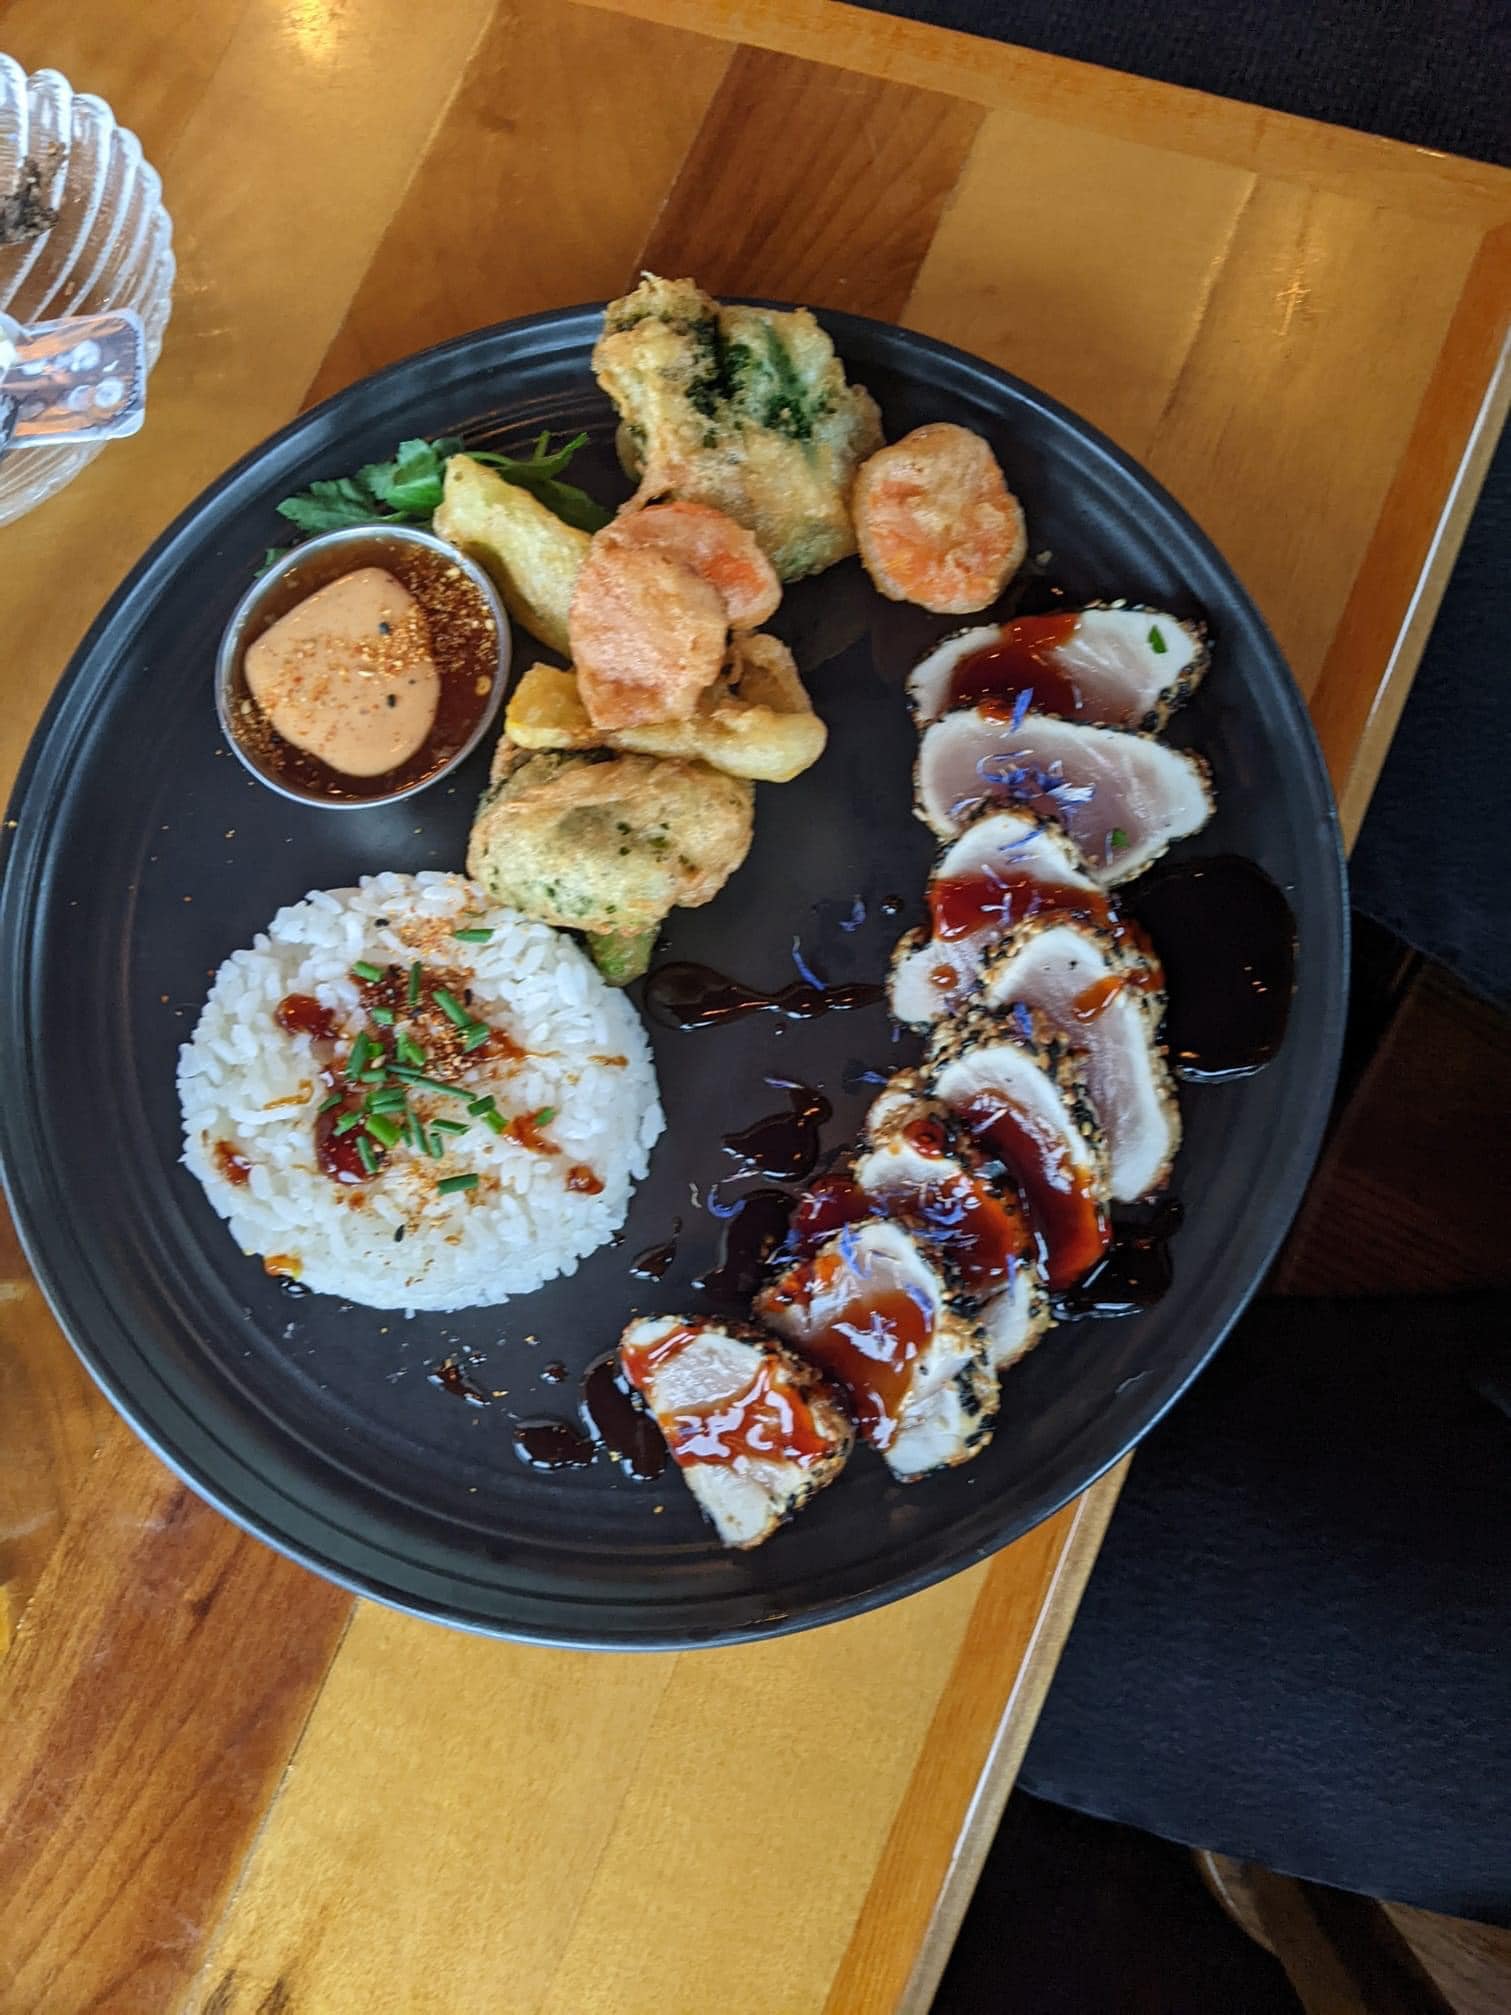 Seared ahi tuna, tempura veggies, and steamed rice at Big Fish Cafe in Reedsport, Oregon